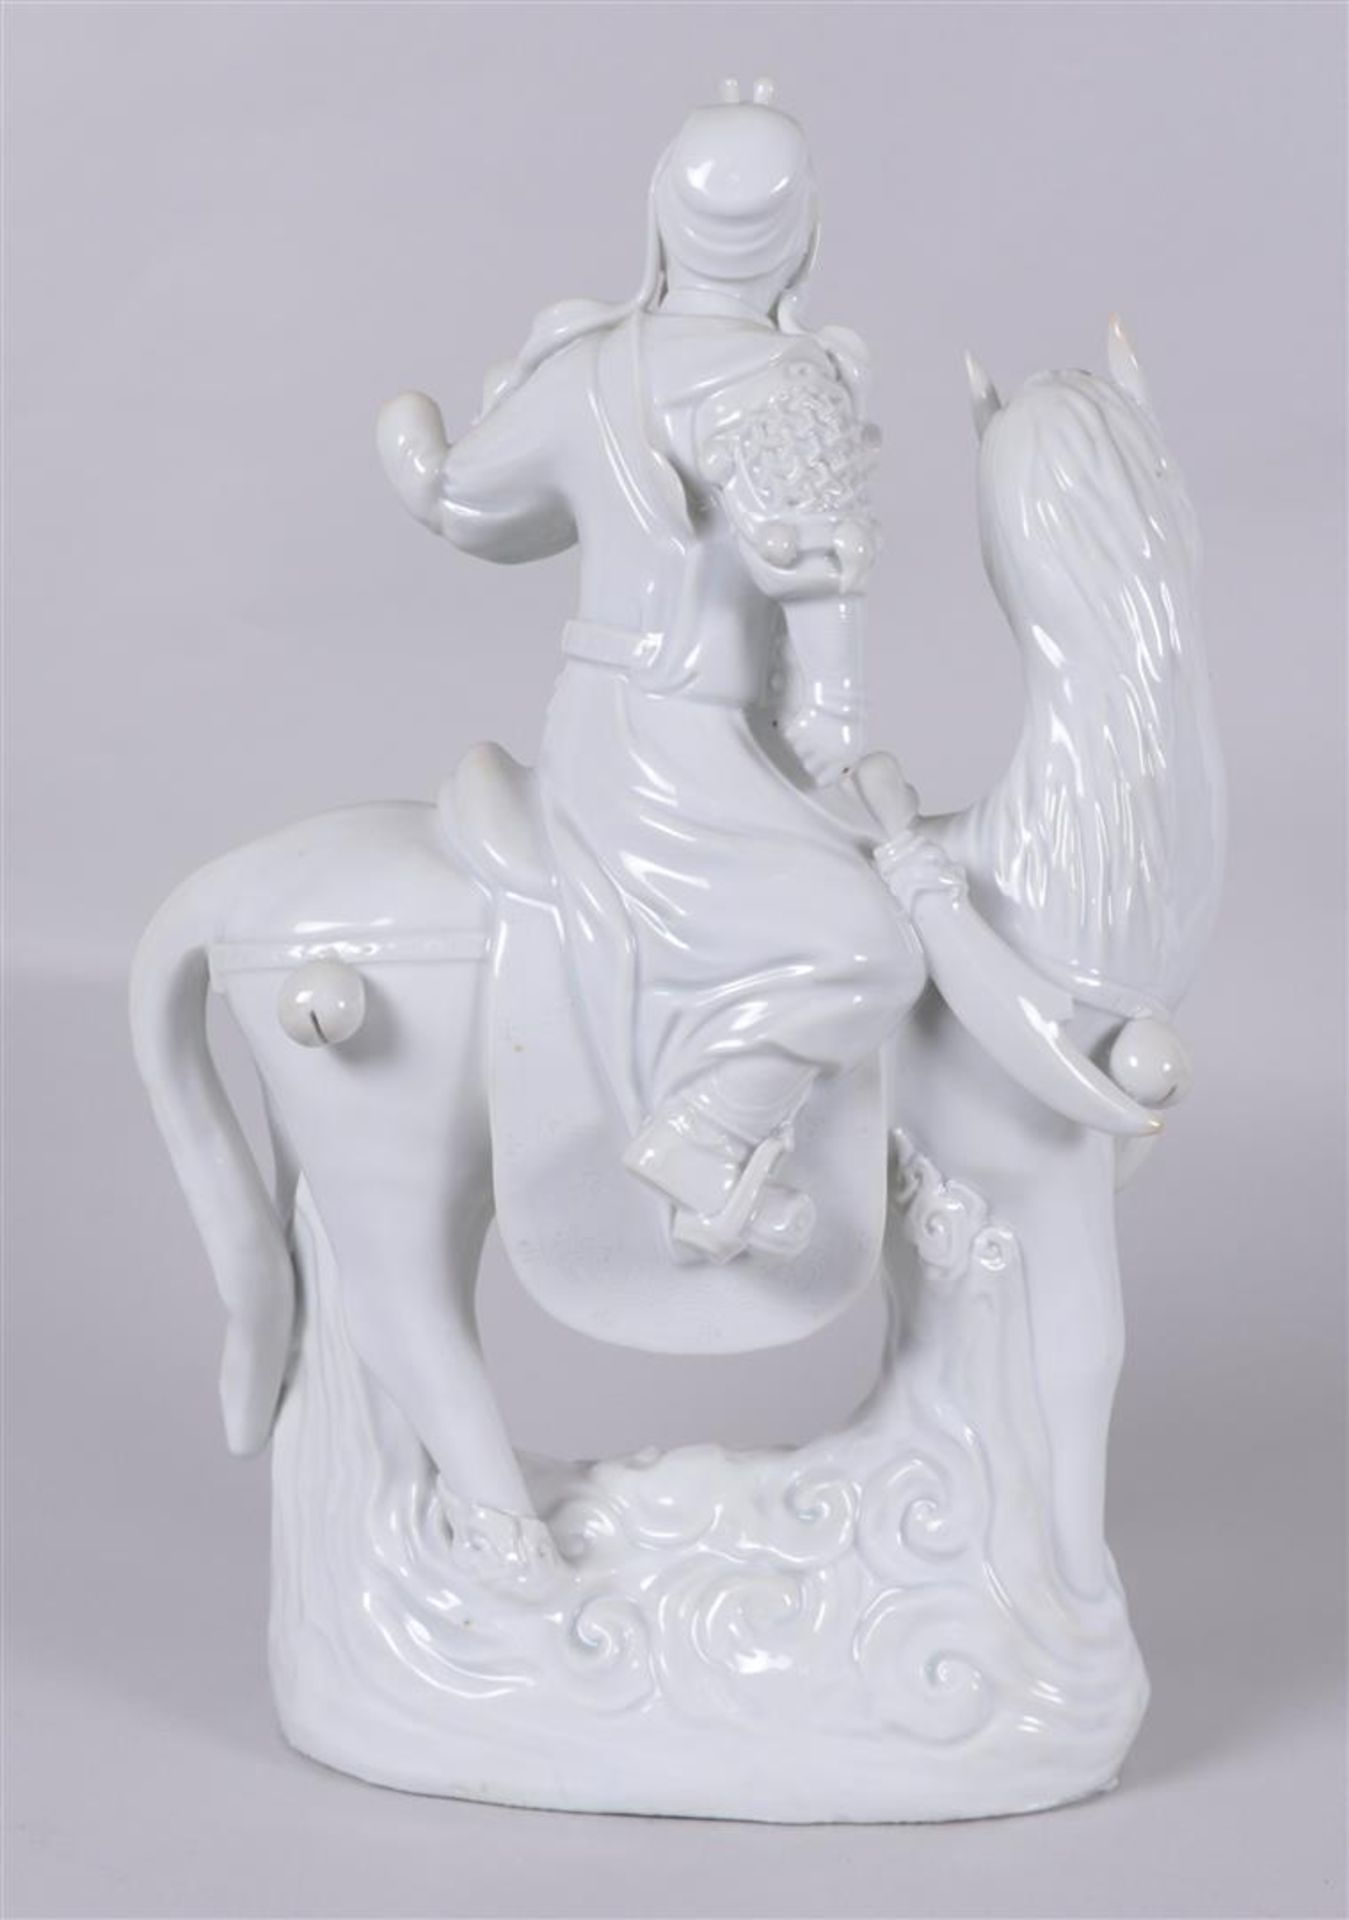 A blanc de Chine figure of a warrior on horseback. China, 20th century.
40 x 30 cm. - Bild 3 aus 3